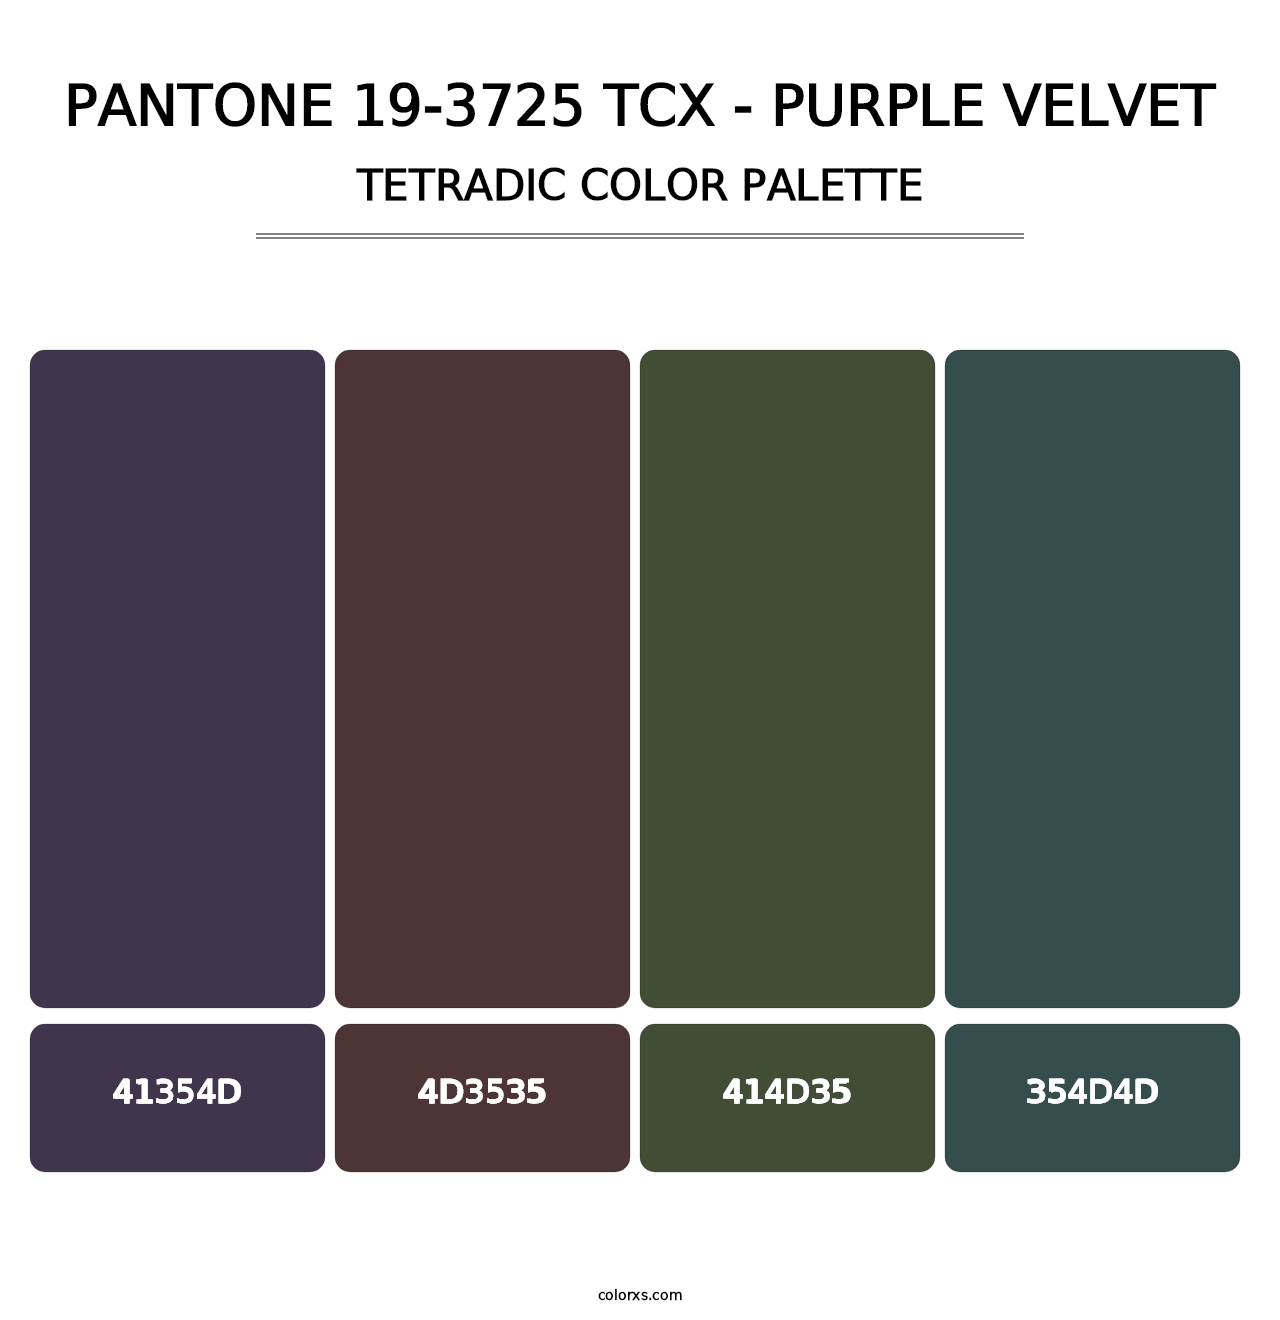 PANTONE 19-3725 TCX - Purple Velvet - Tetradic Color Palette